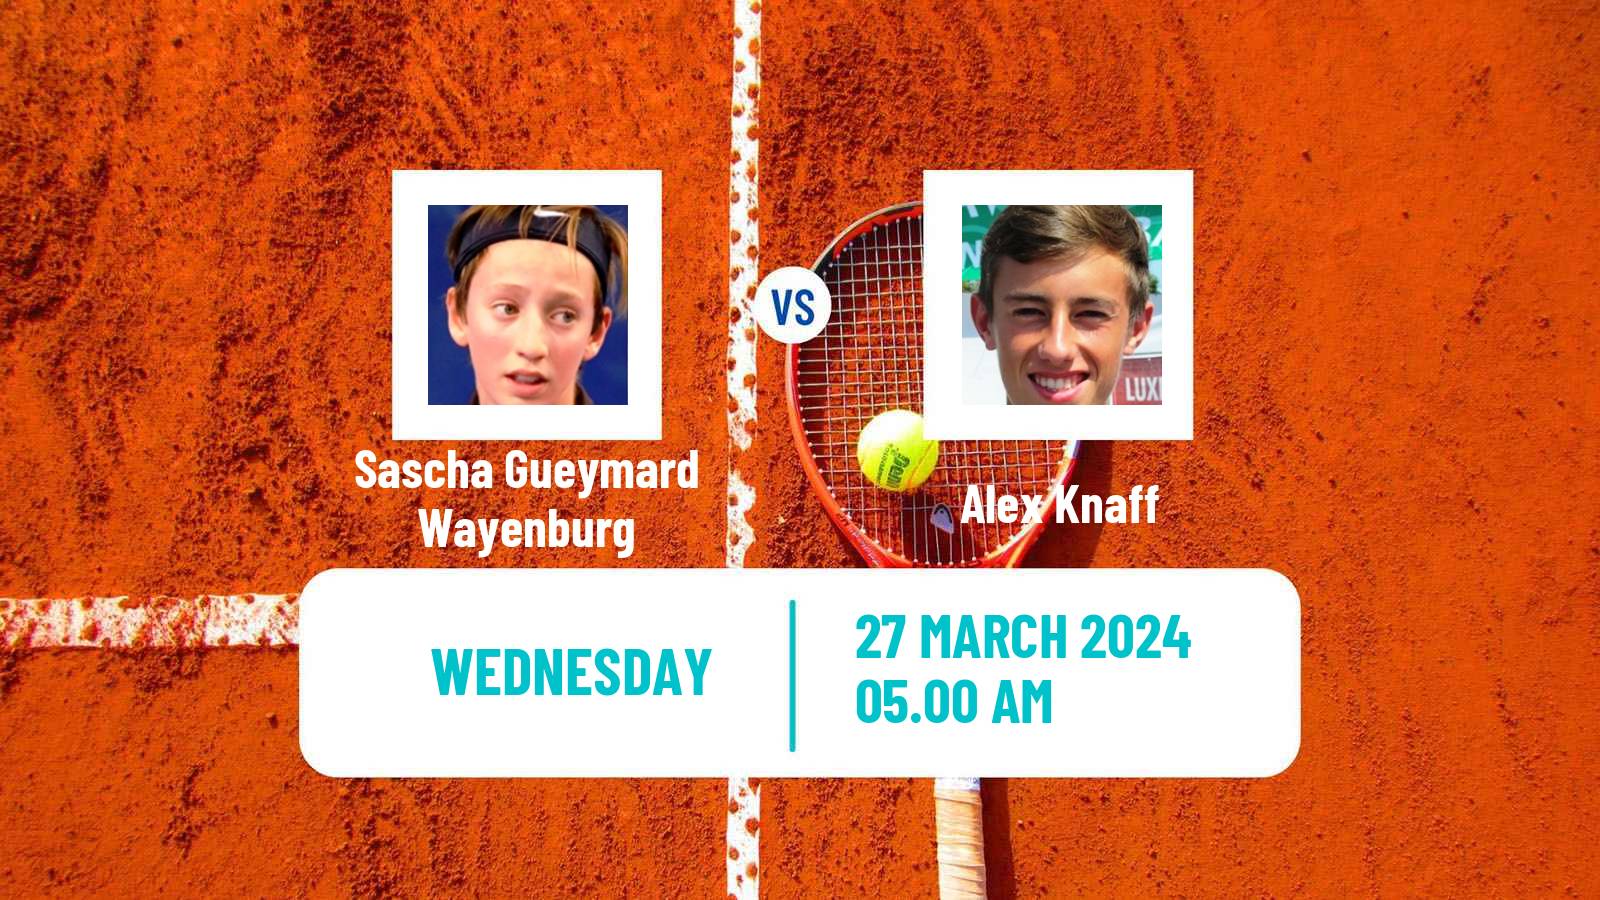 Tennis ITF M25 Saint Dizier Men Sascha Gueymard Wayenburg - Alex Knaff